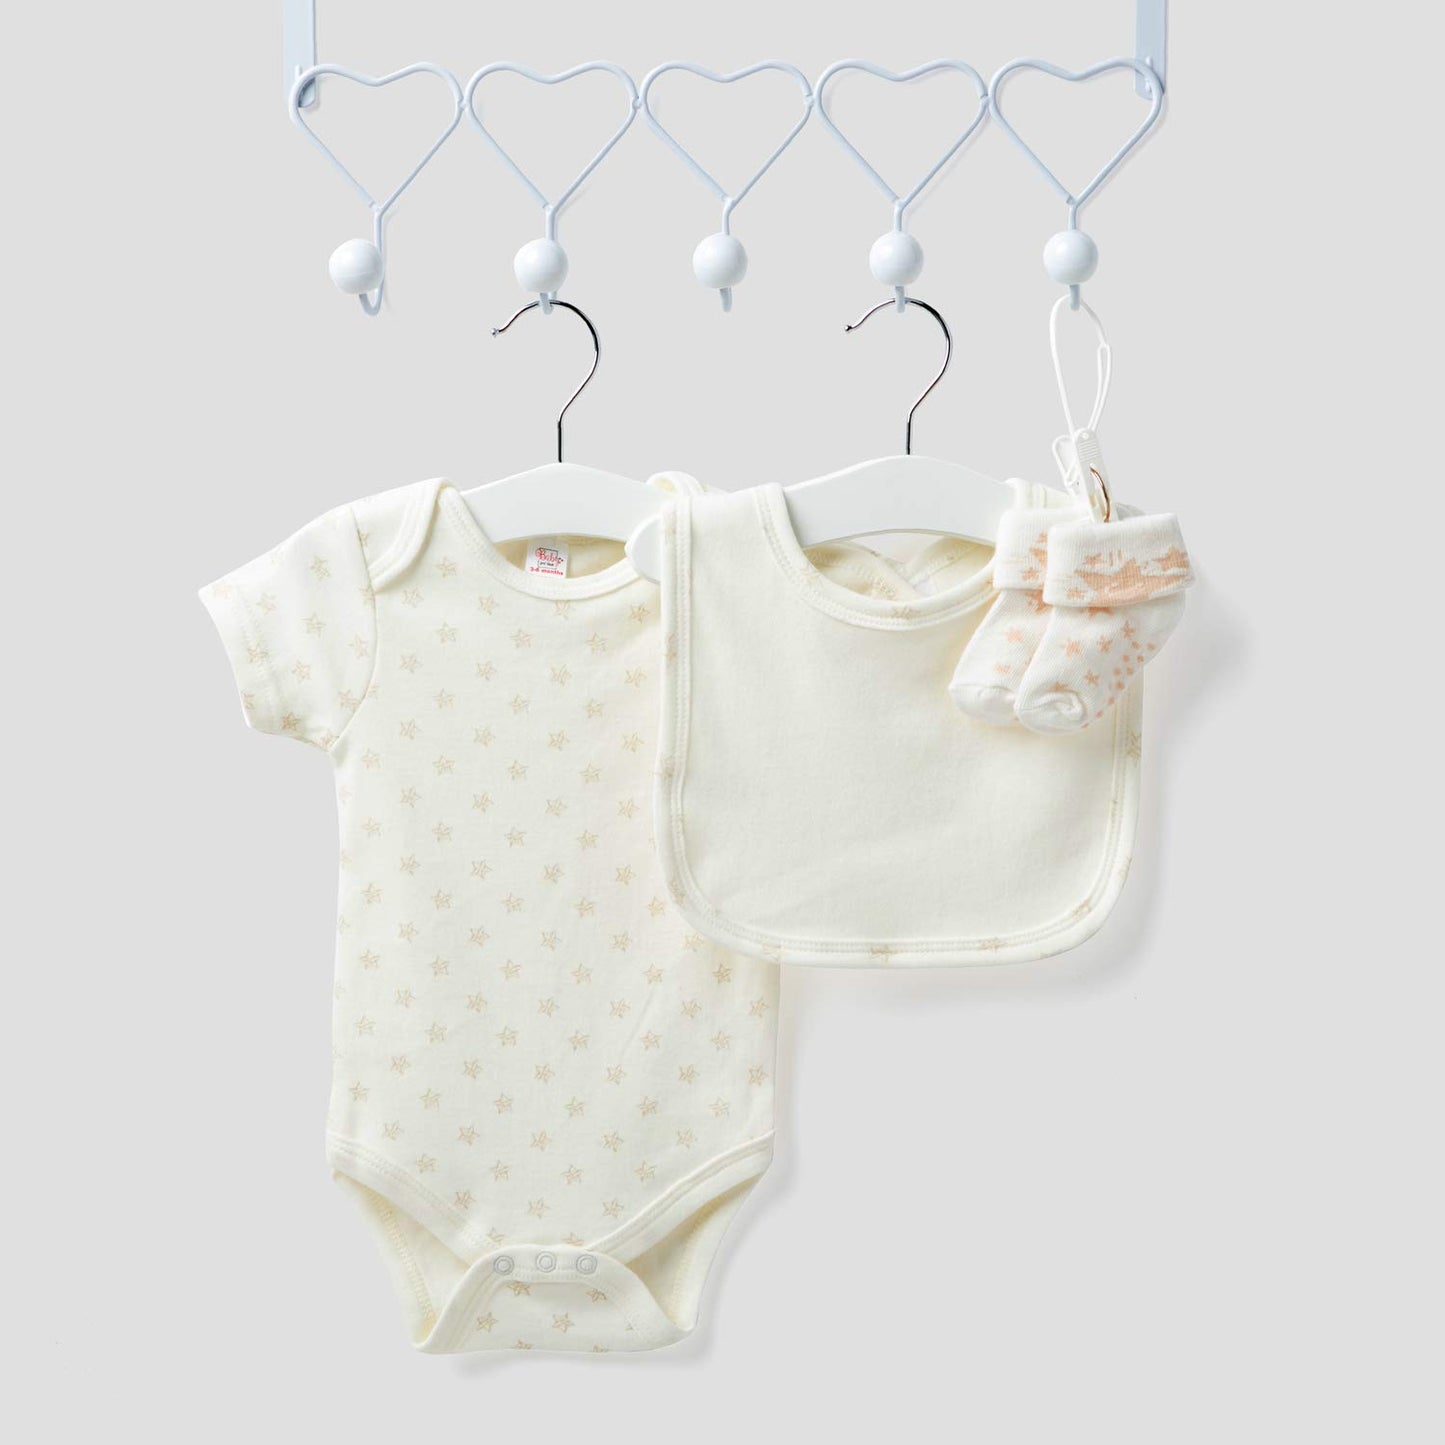 Baby Shower Gift Boy - 12 pcs Newborn Essentials for New Born Baby Boy Gifts